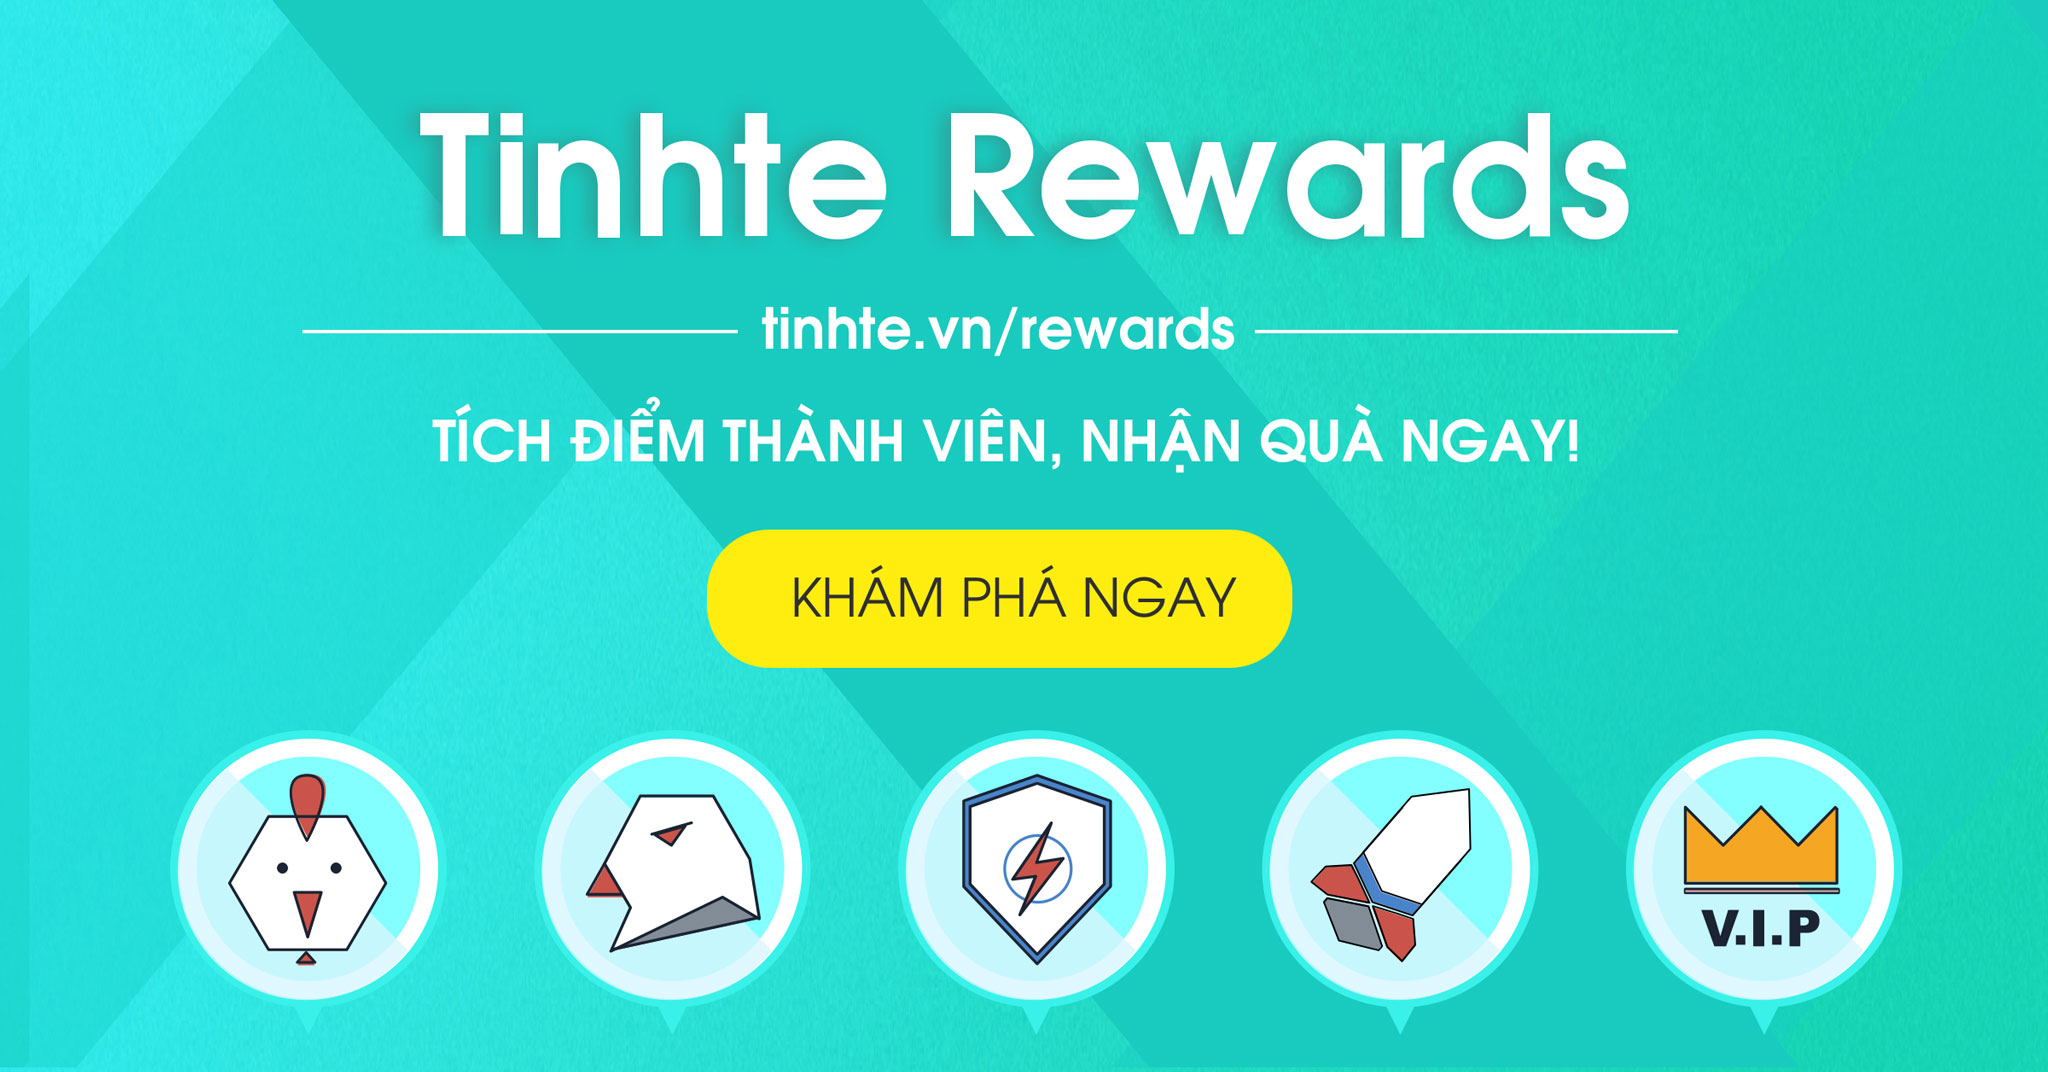 extra_home_tinhte_rewards.jpg